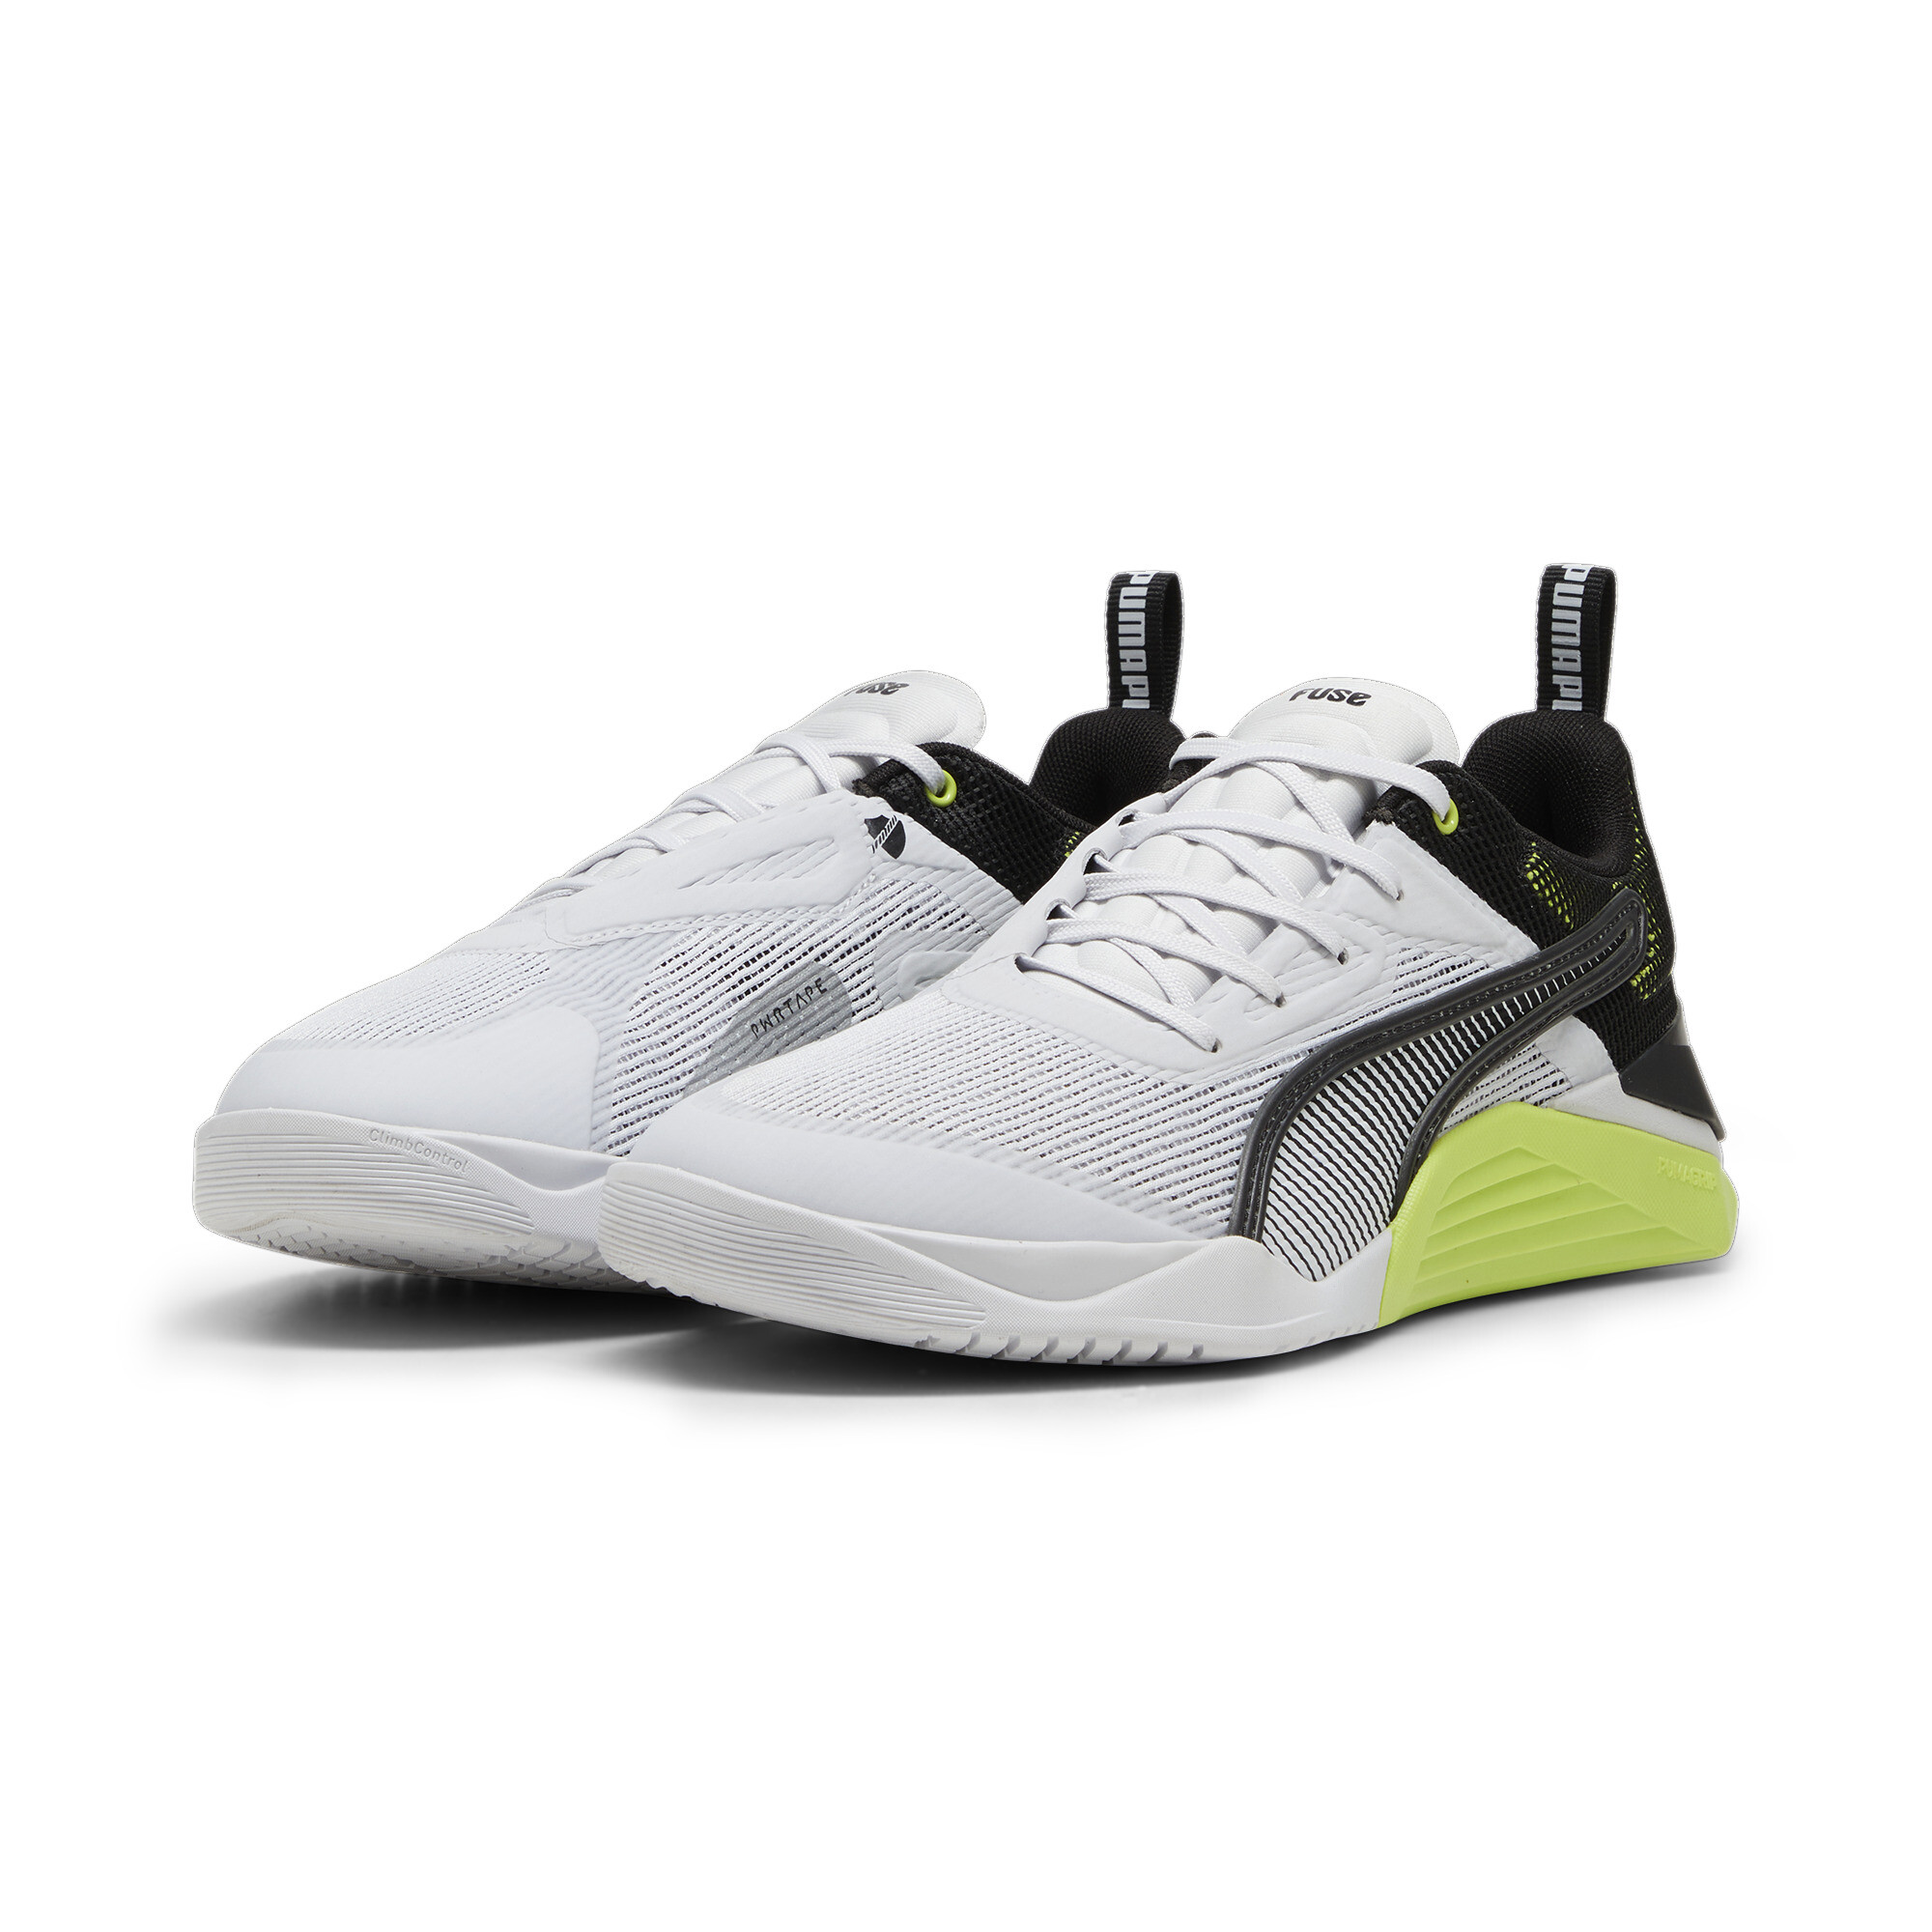 Men's PUMA Fuse 3.0 Training Shoes In Gray, Size EU 48.5